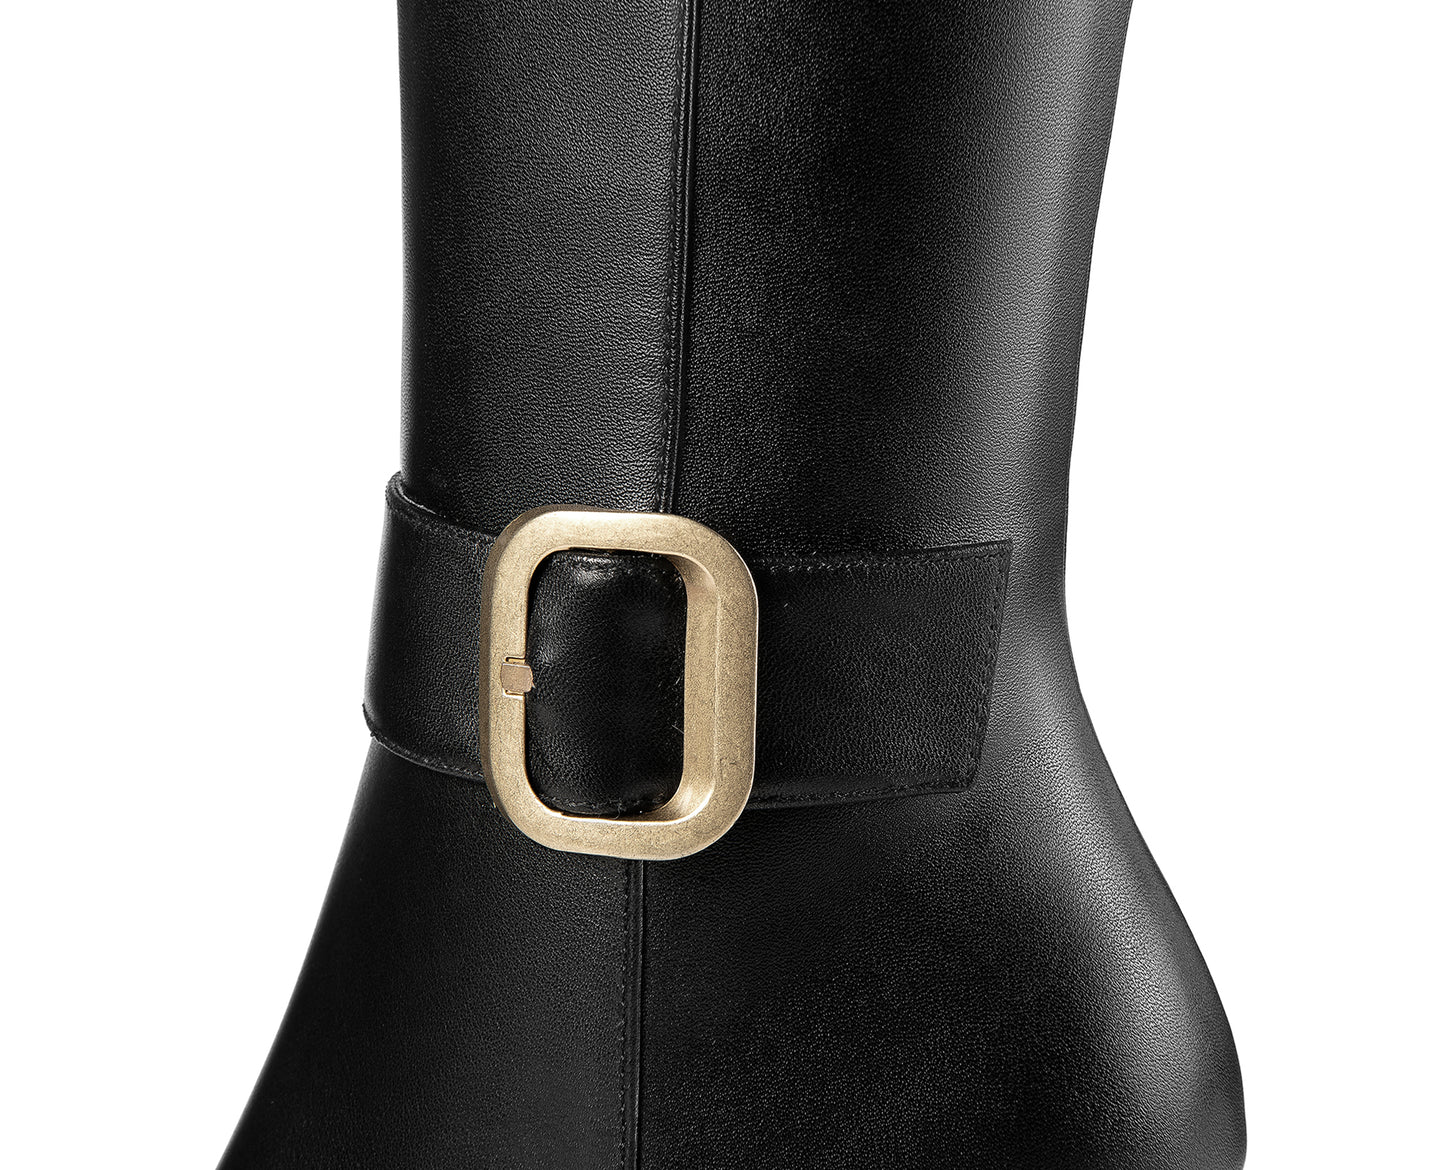 TinaCus Handmade Women's Genuine Leather High Heel Side Zip Up Belt Decor Pointed Toe Black Knee-High Boots